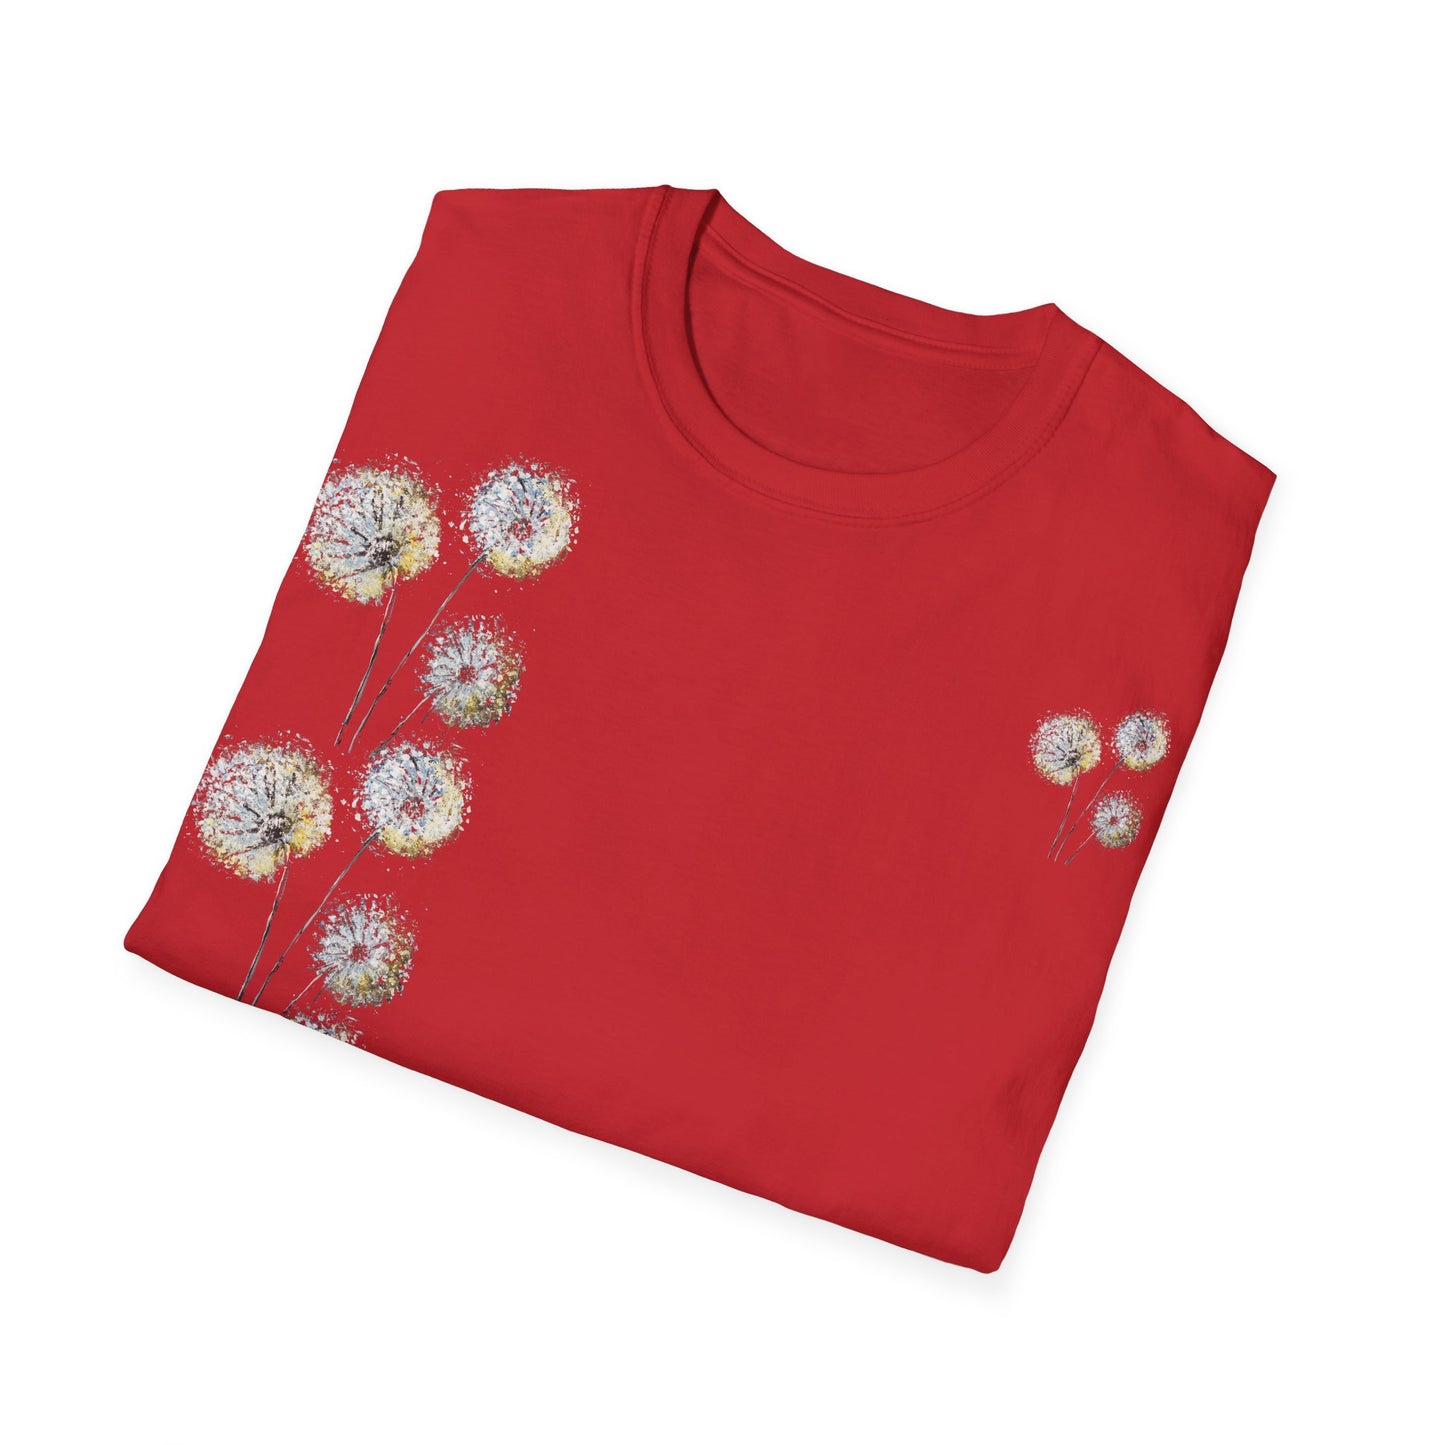 Dandelion Unisex T-Shirt 